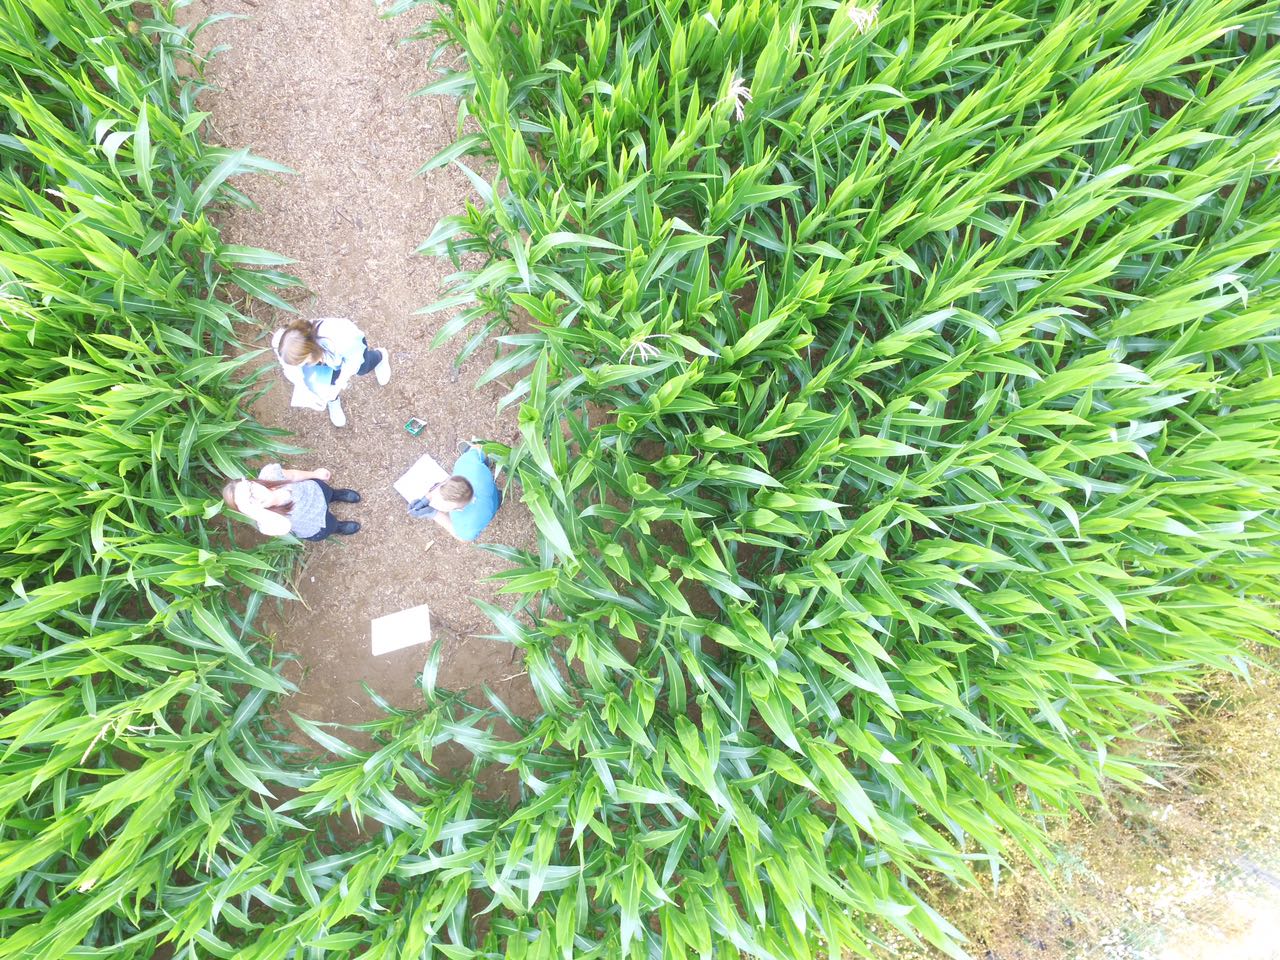 Maislabyrinth startet am Sonntag